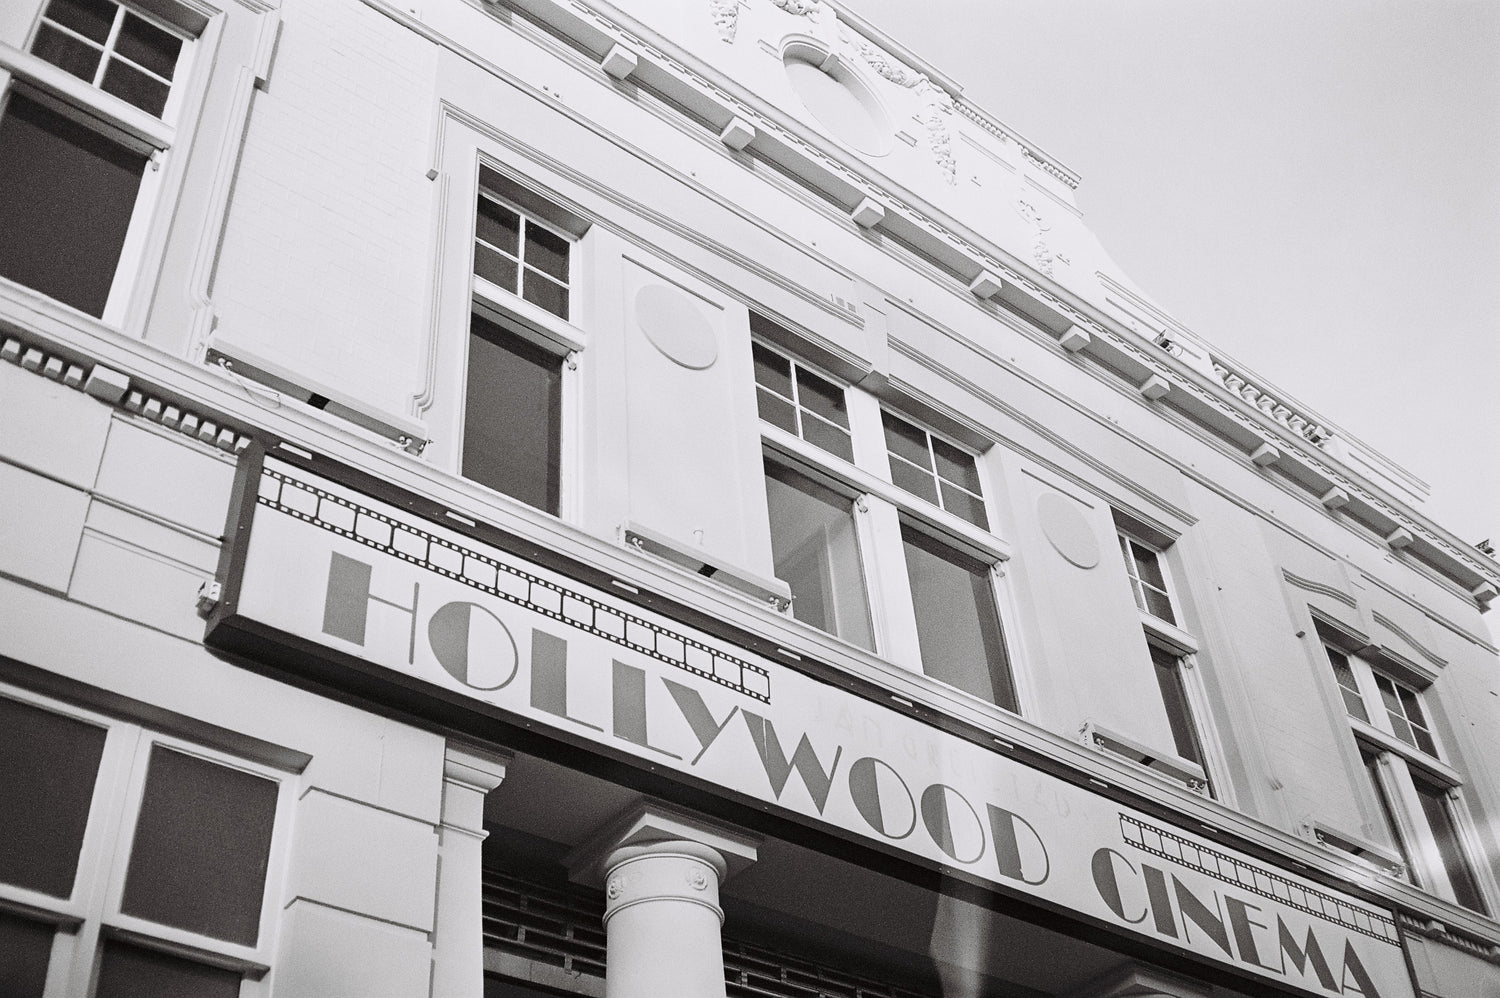 Hollywood Cinema Avondale